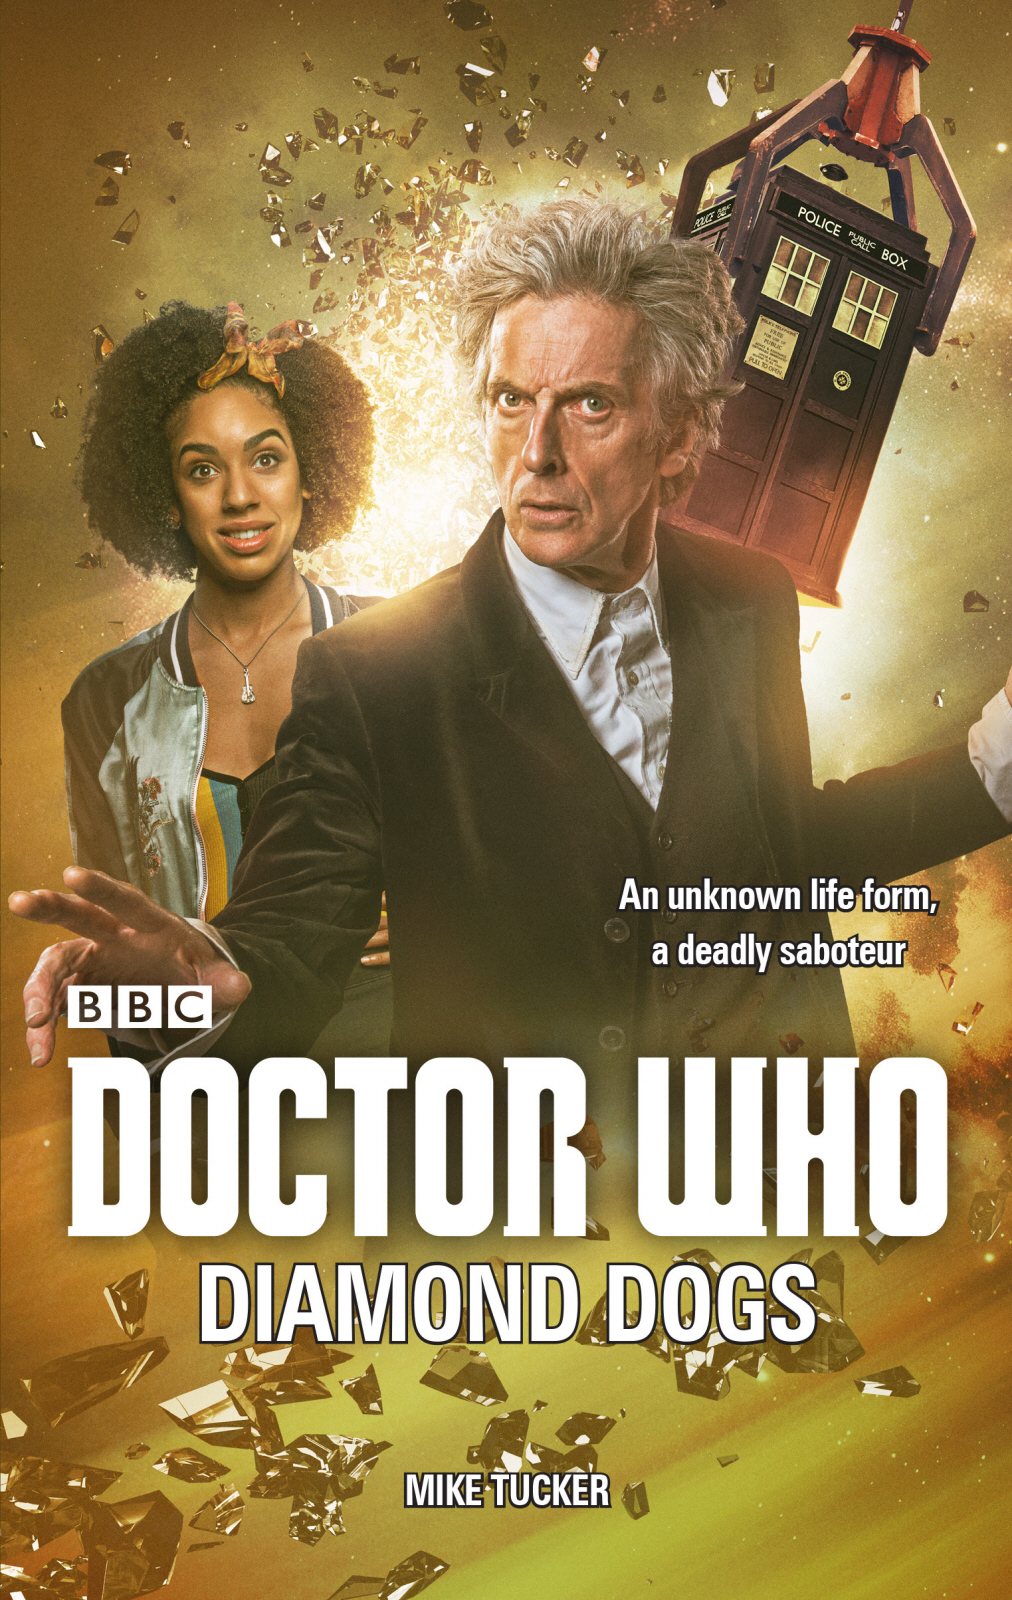 BBC Doctor Who: Diamond Dogs